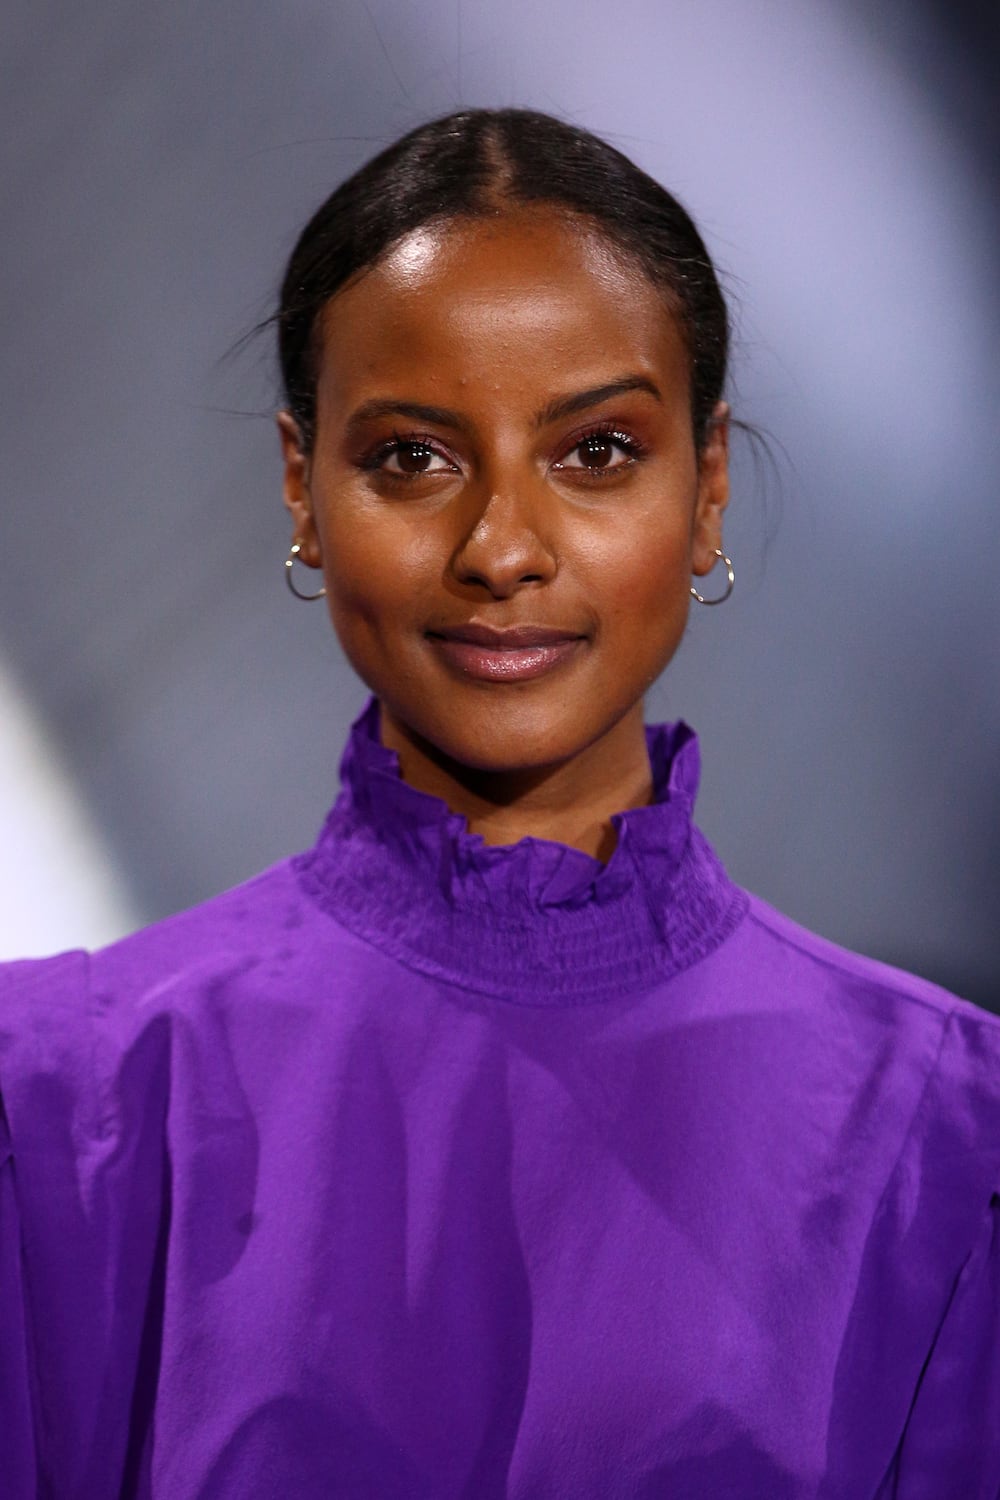 Ethiopian model